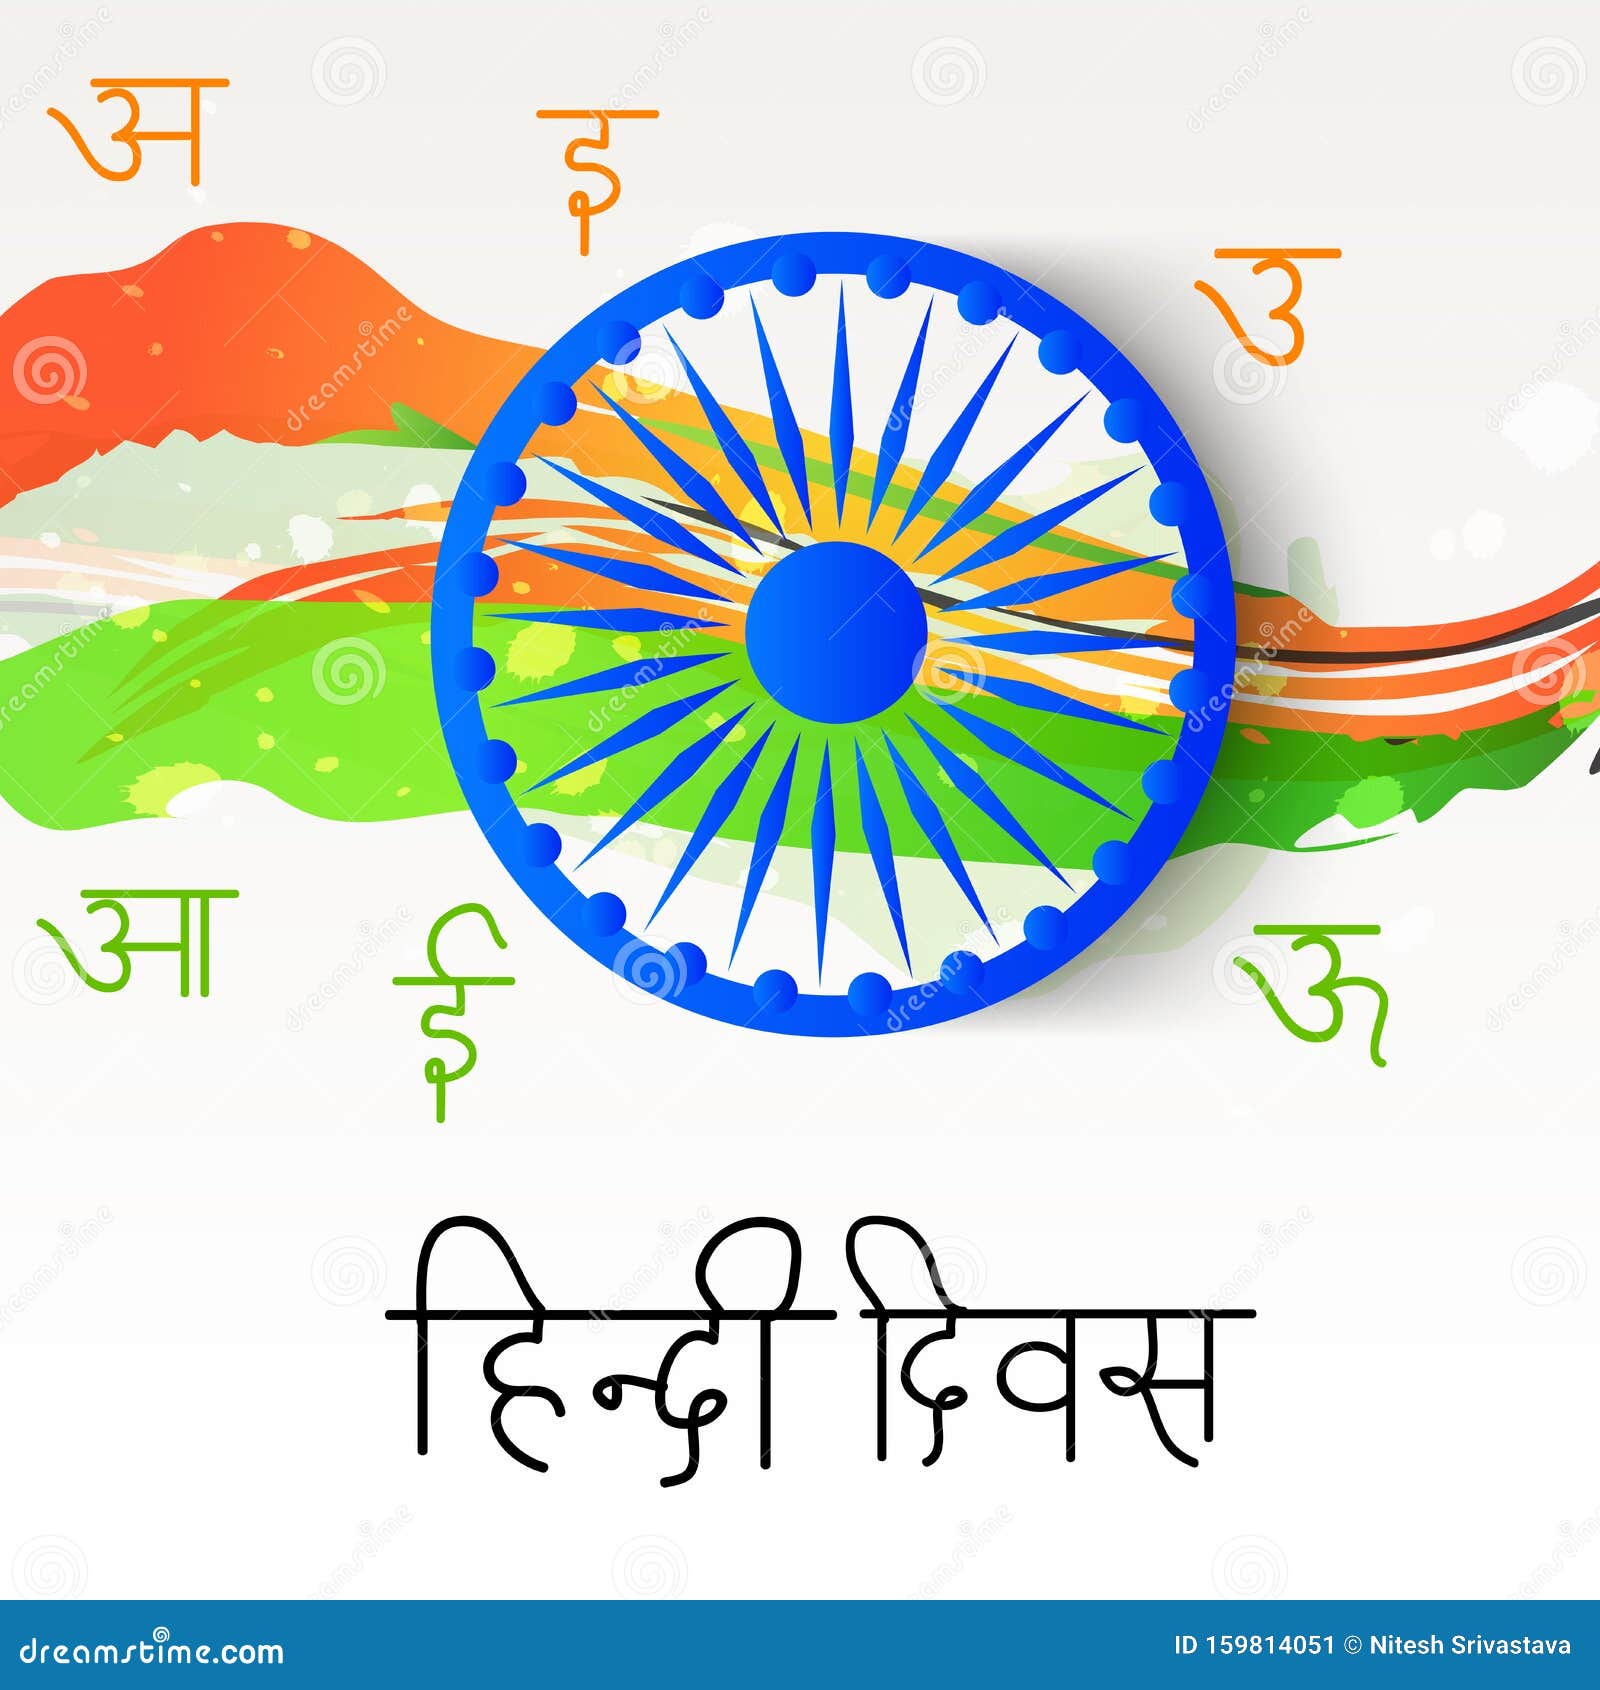 Hindi diwas stock illustration. Illustration of independence - 159814051